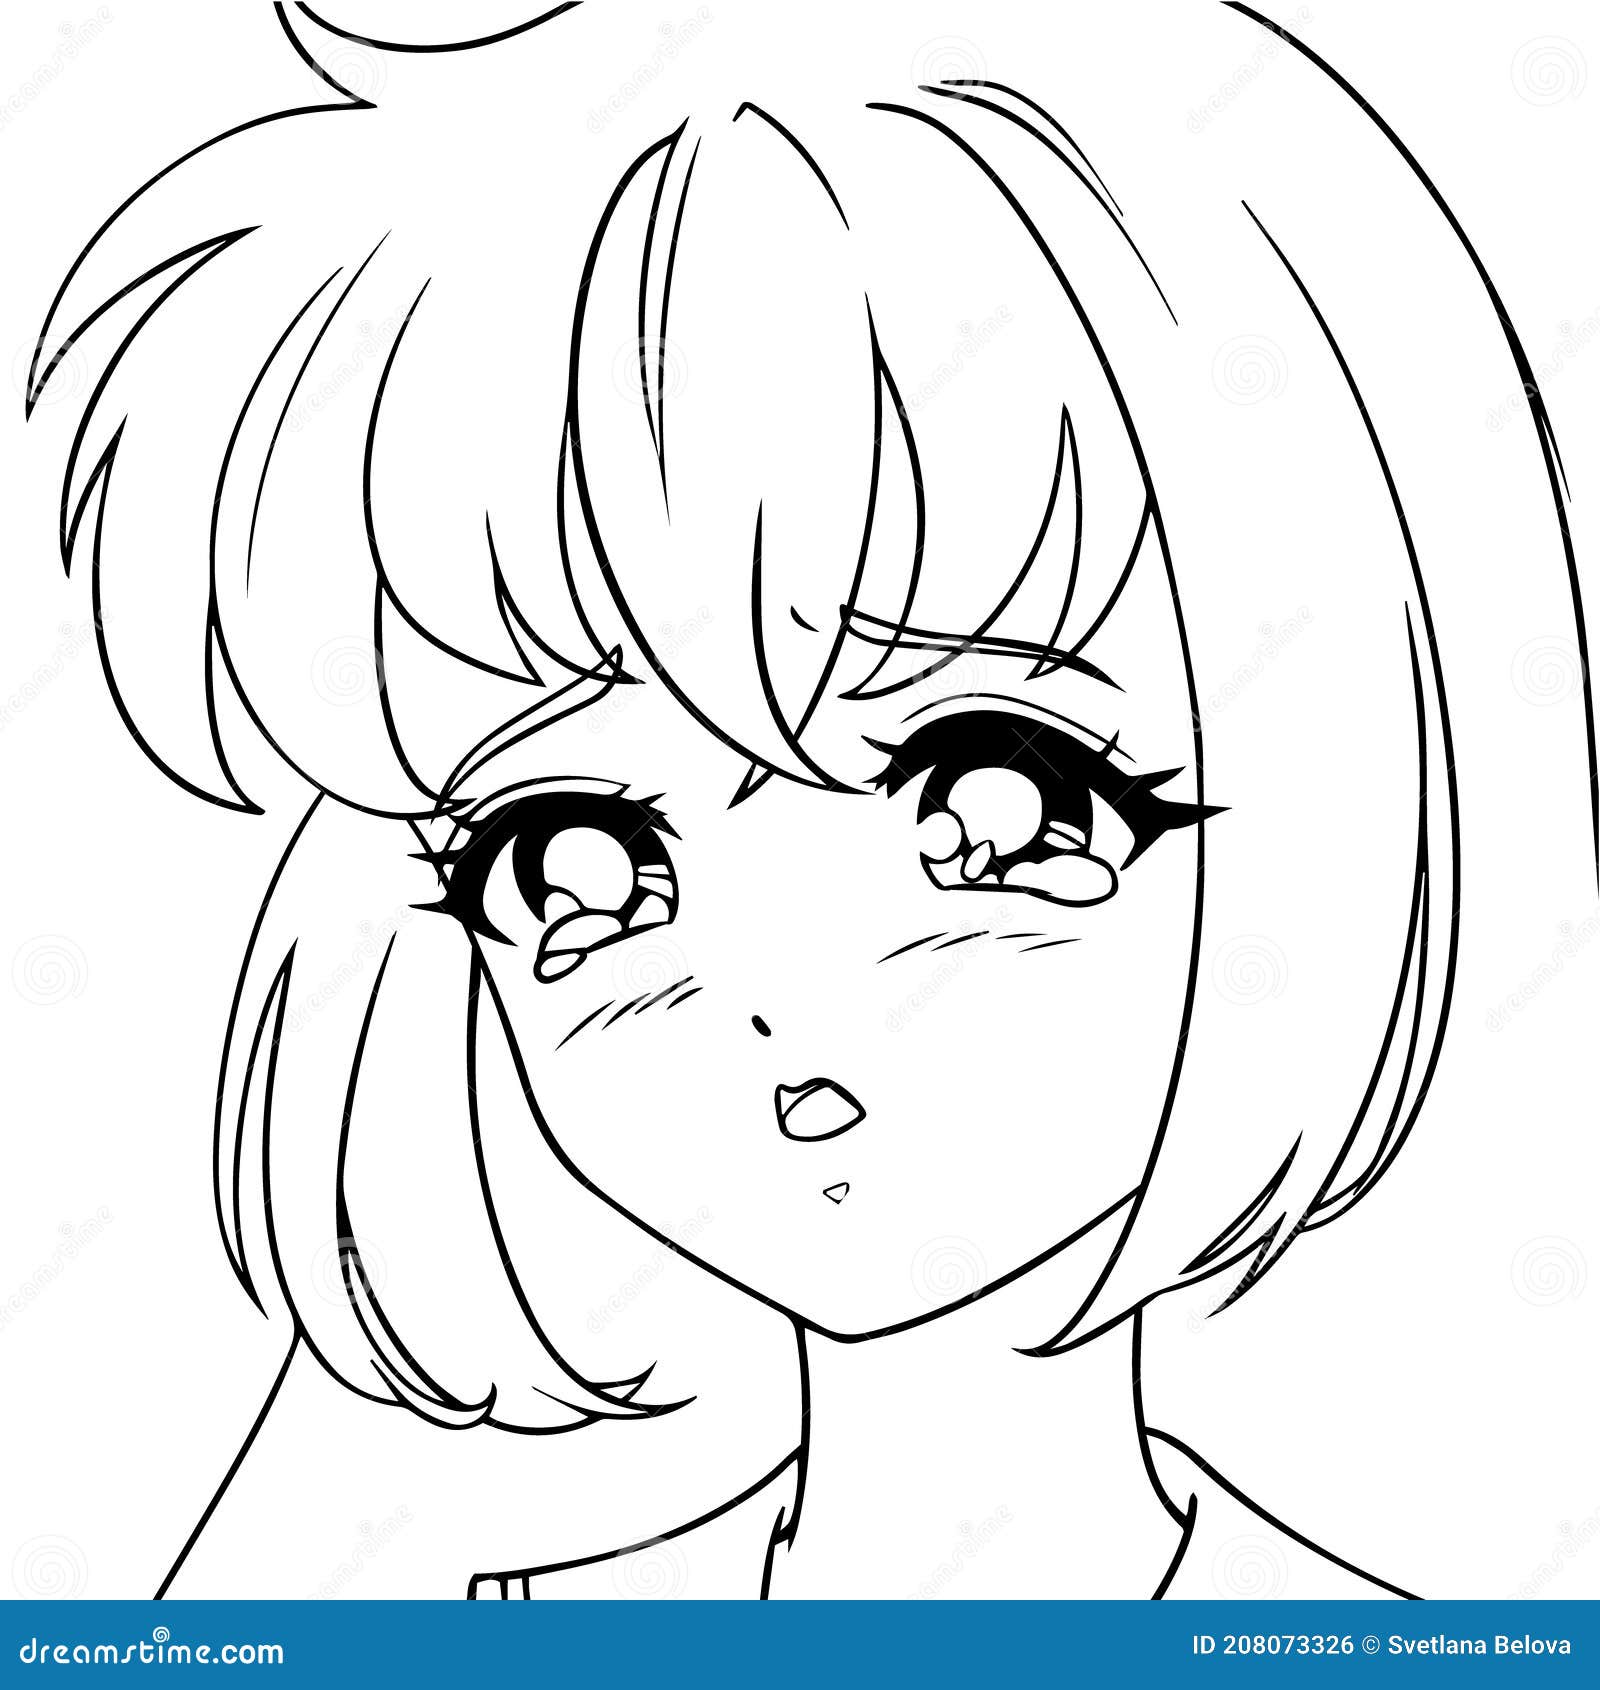 840 Crying Anime Girl Illustrations RoyaltyFree Vector Graphics  Clip  Art  iStock